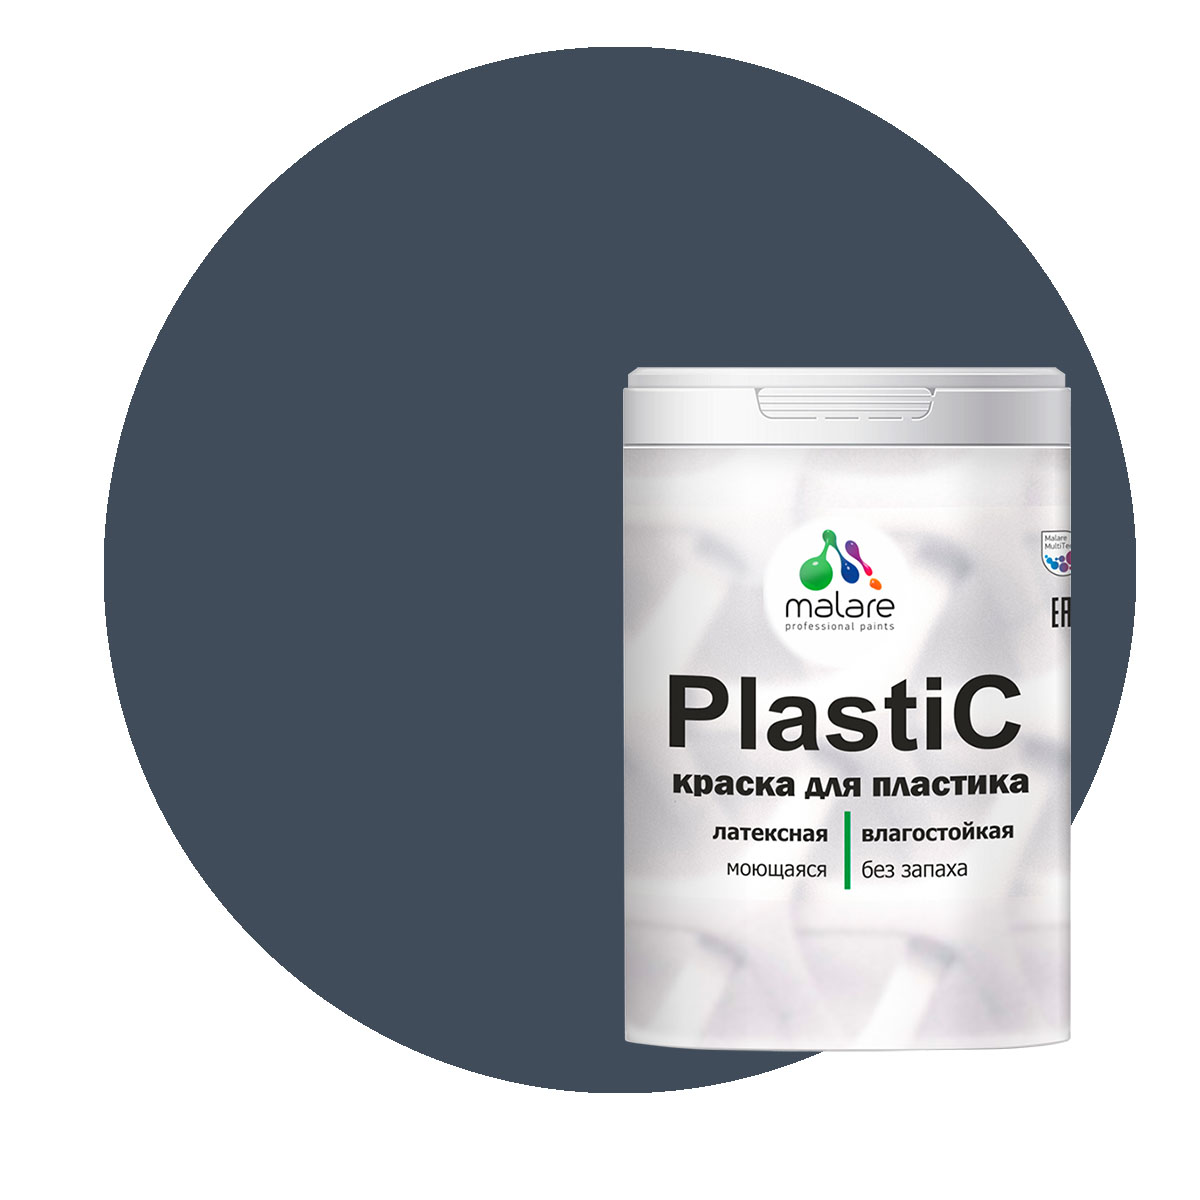 Краска Malare PlastiC для пластика, ПВХ, для сайдинга, гранитный, 2 кг. краска malare plastic для пластика пвх для сайдинга свежая охра 2 кг